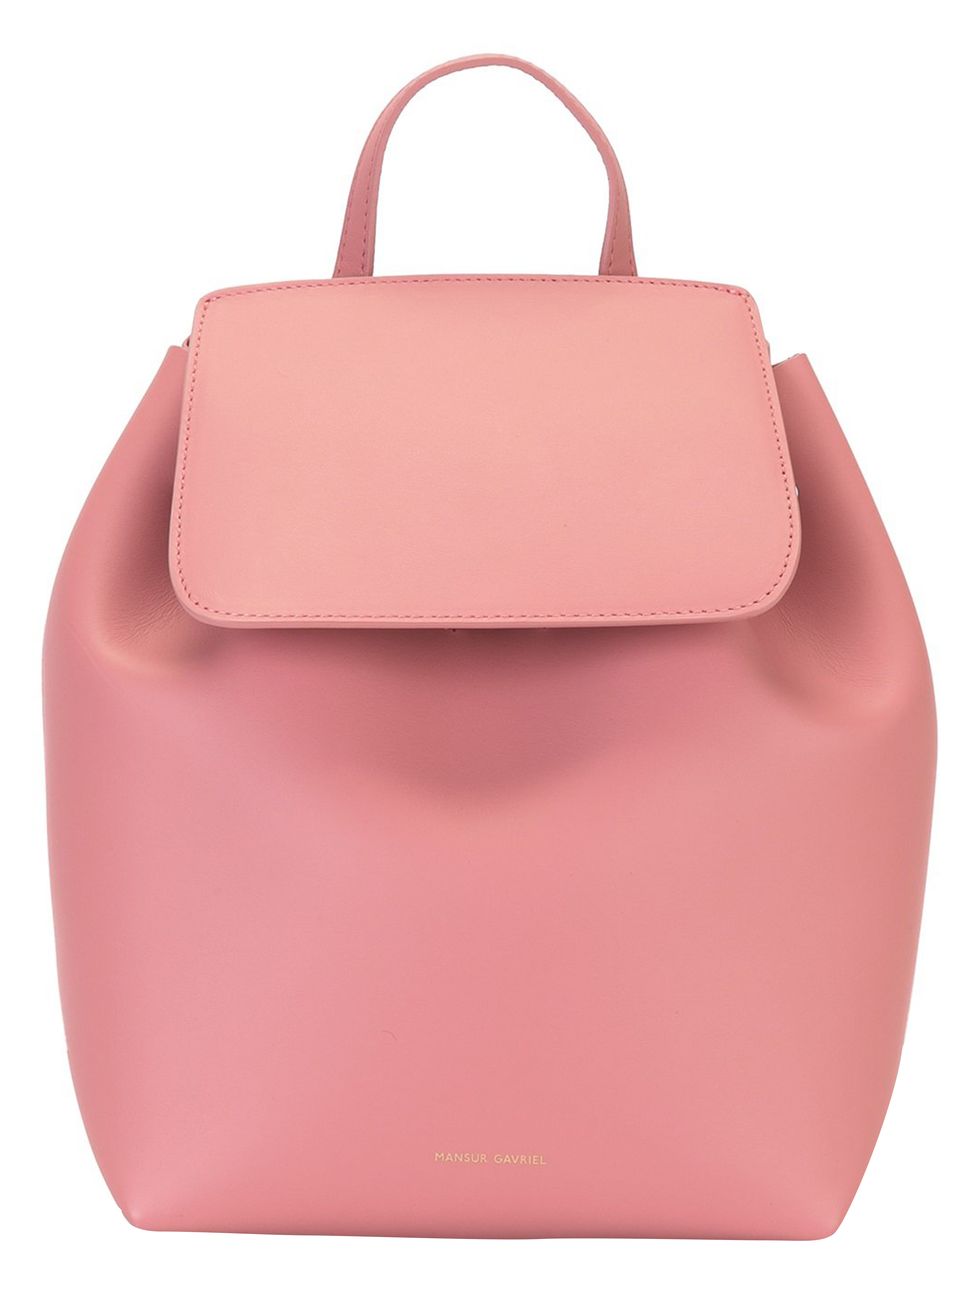 Handbag, Bag, Pink, Fashion accessory, Leather, Peach, Luggage and bags, Tote bag, Magenta, 